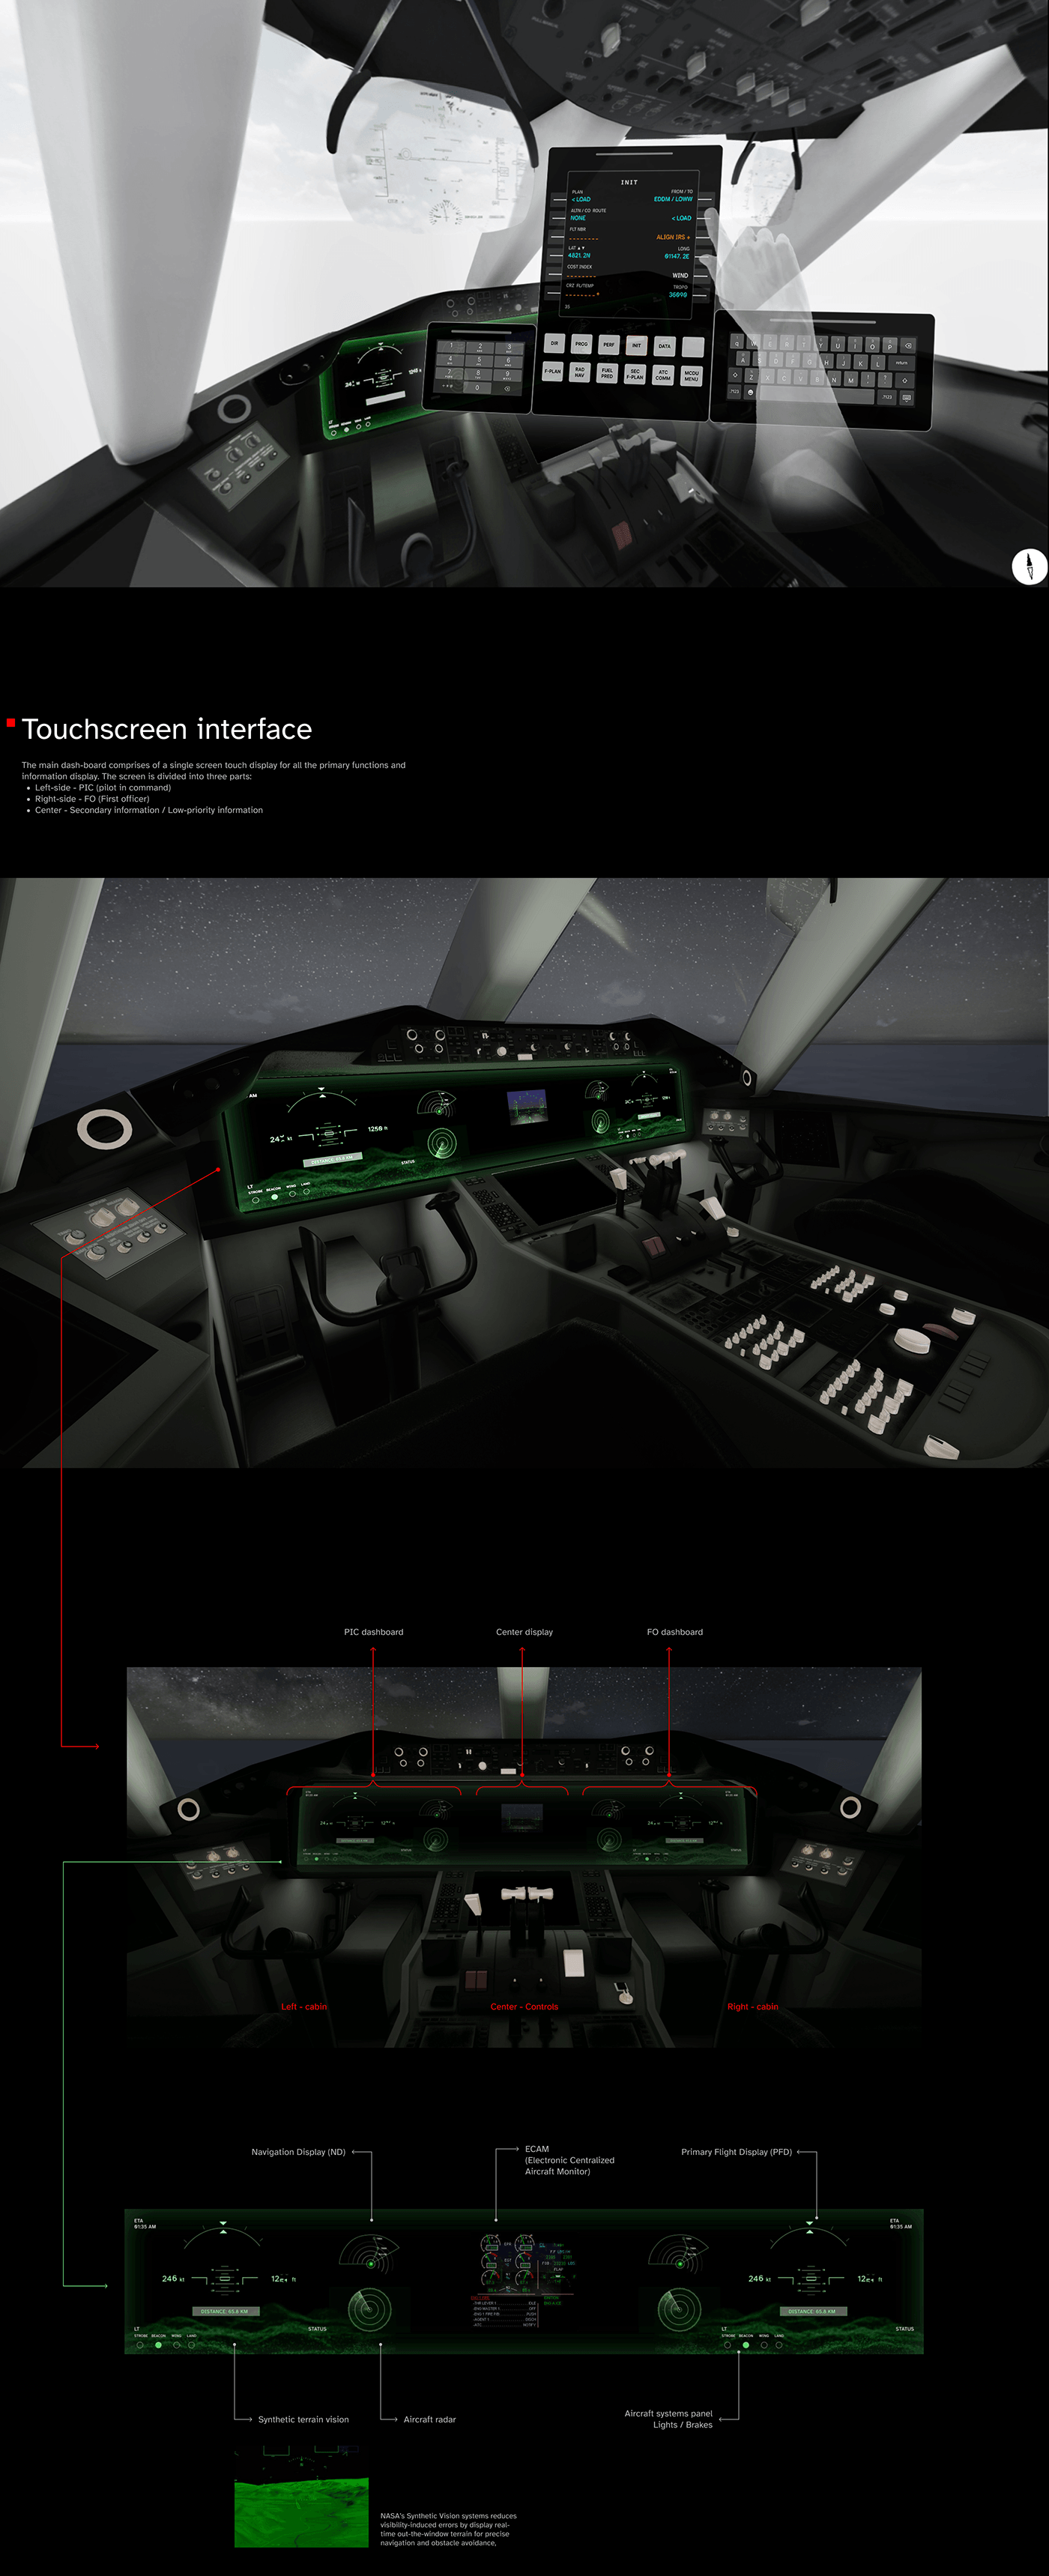 HMI Design user experience UX design Aircraft Cockpit Design cockpit aviation Boeing Airbus human factors